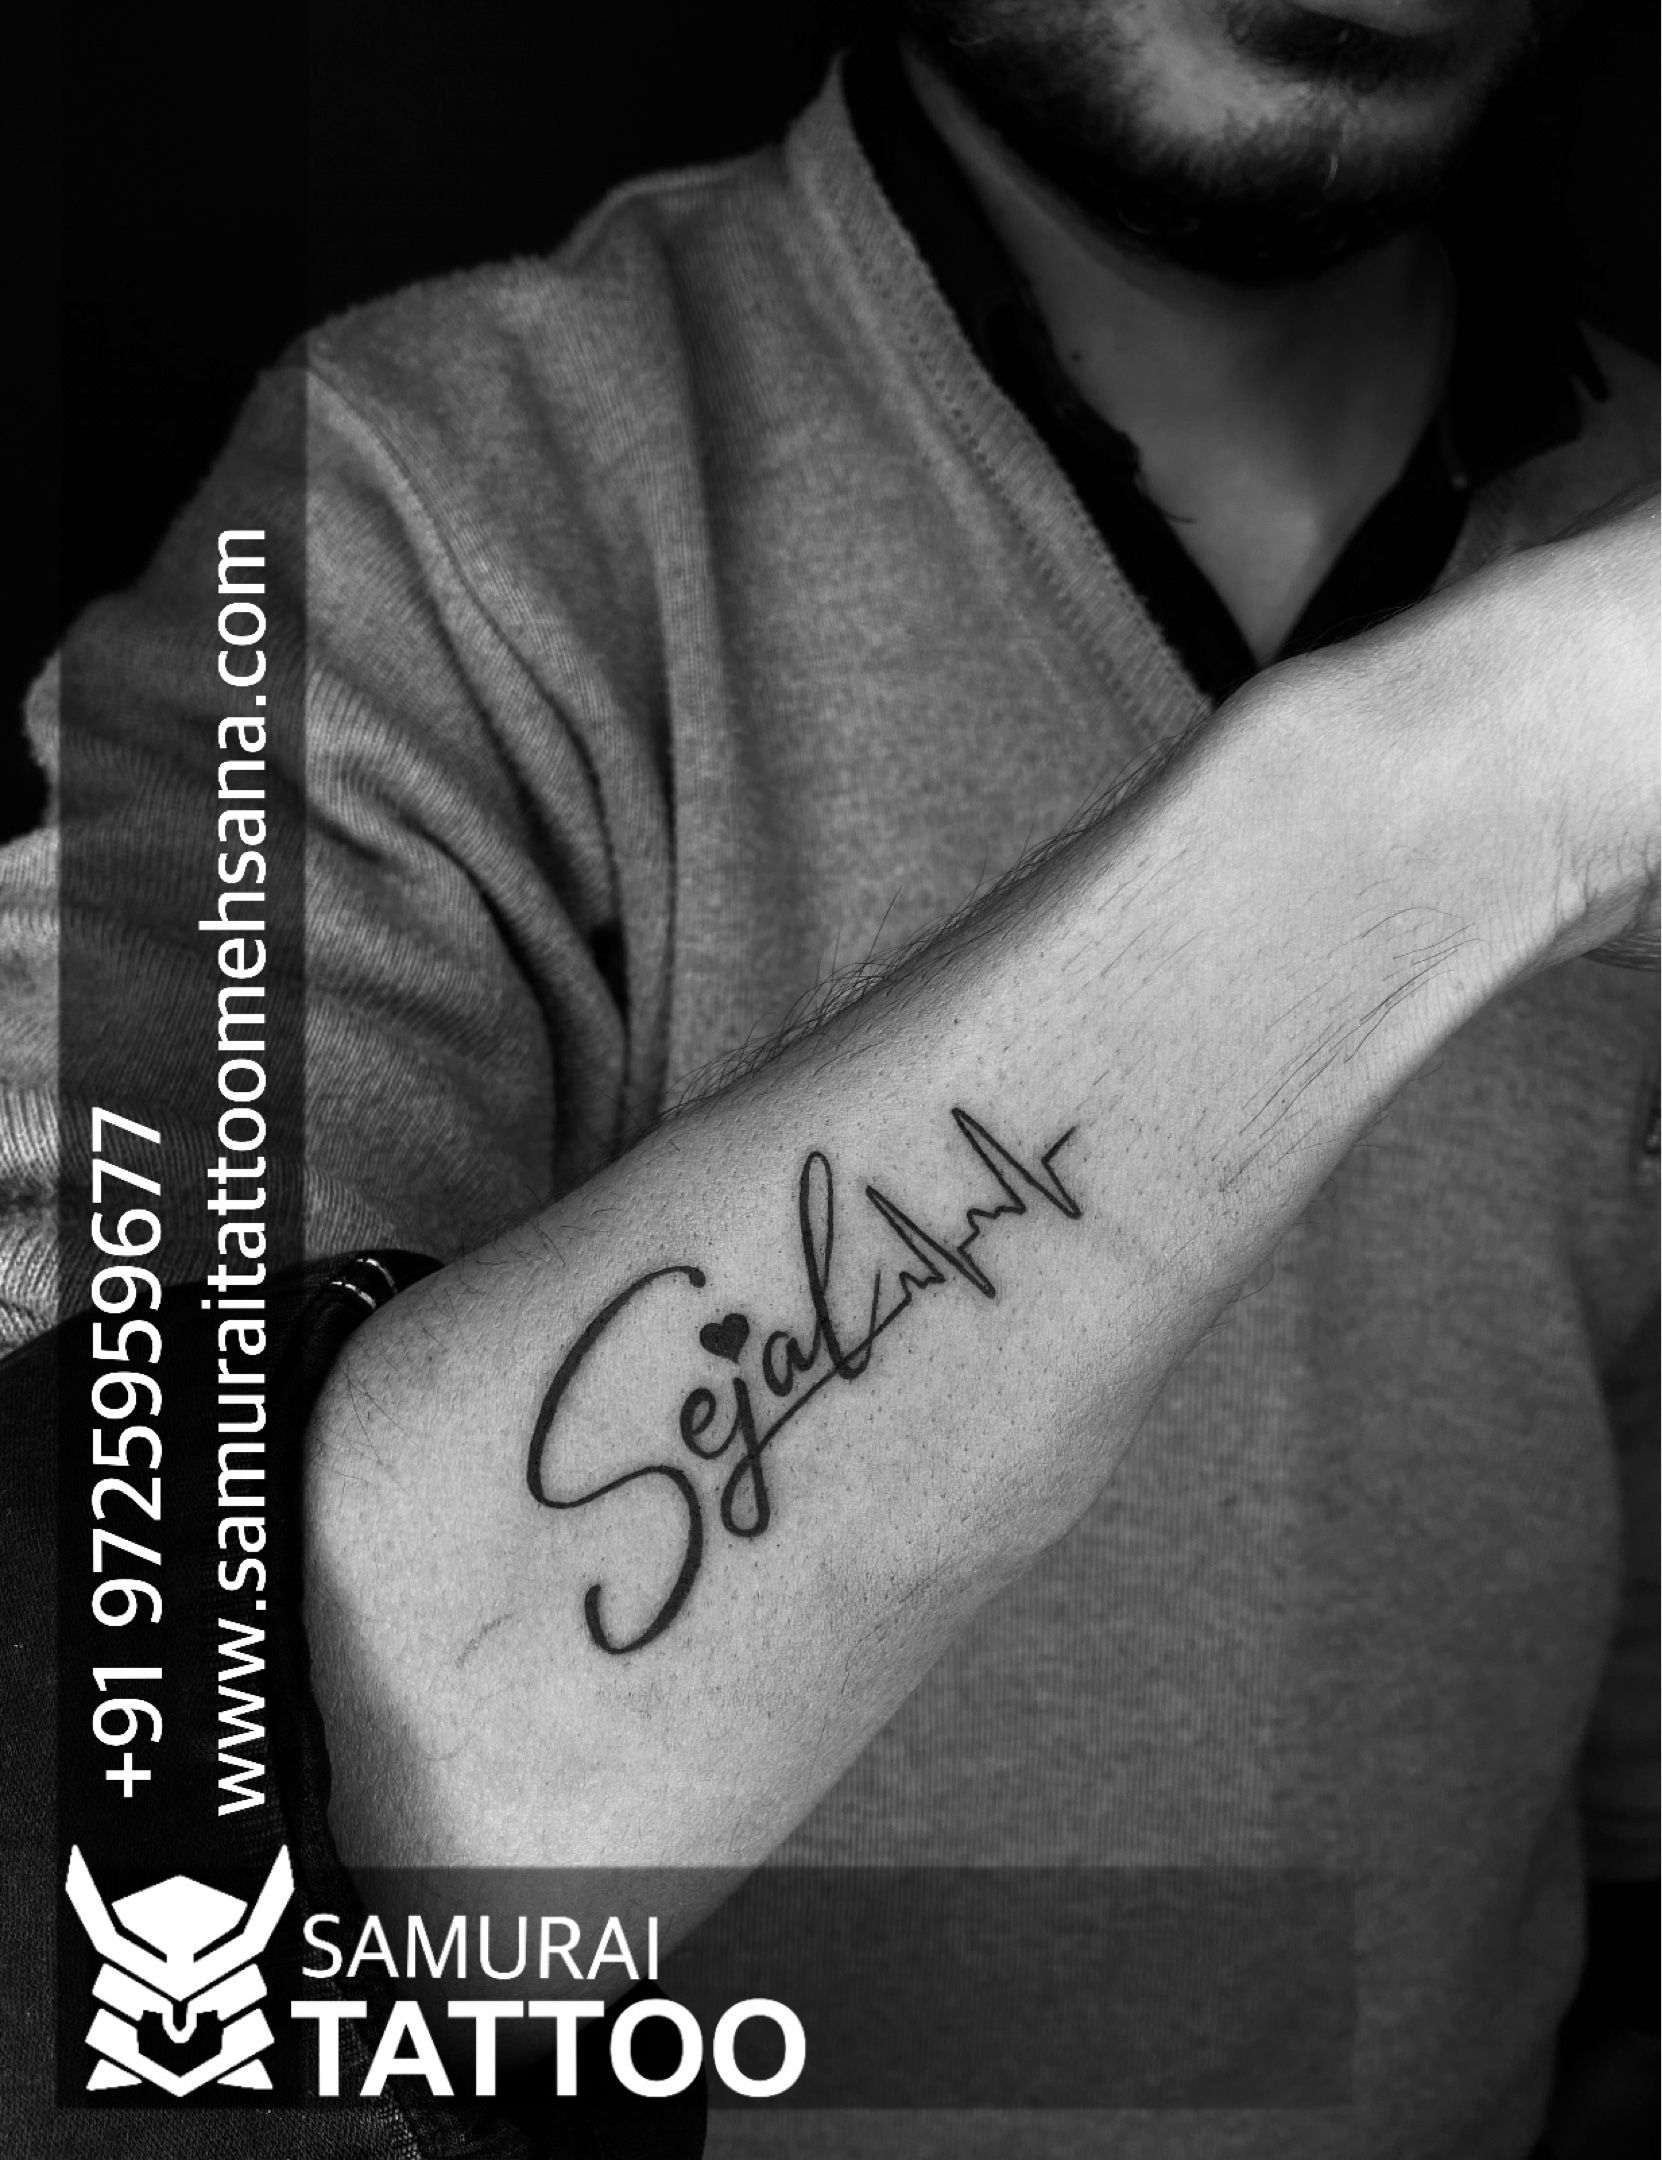 Sumit Name Tattoo | Tattoo studio, Ink tattoo, Name tattoo